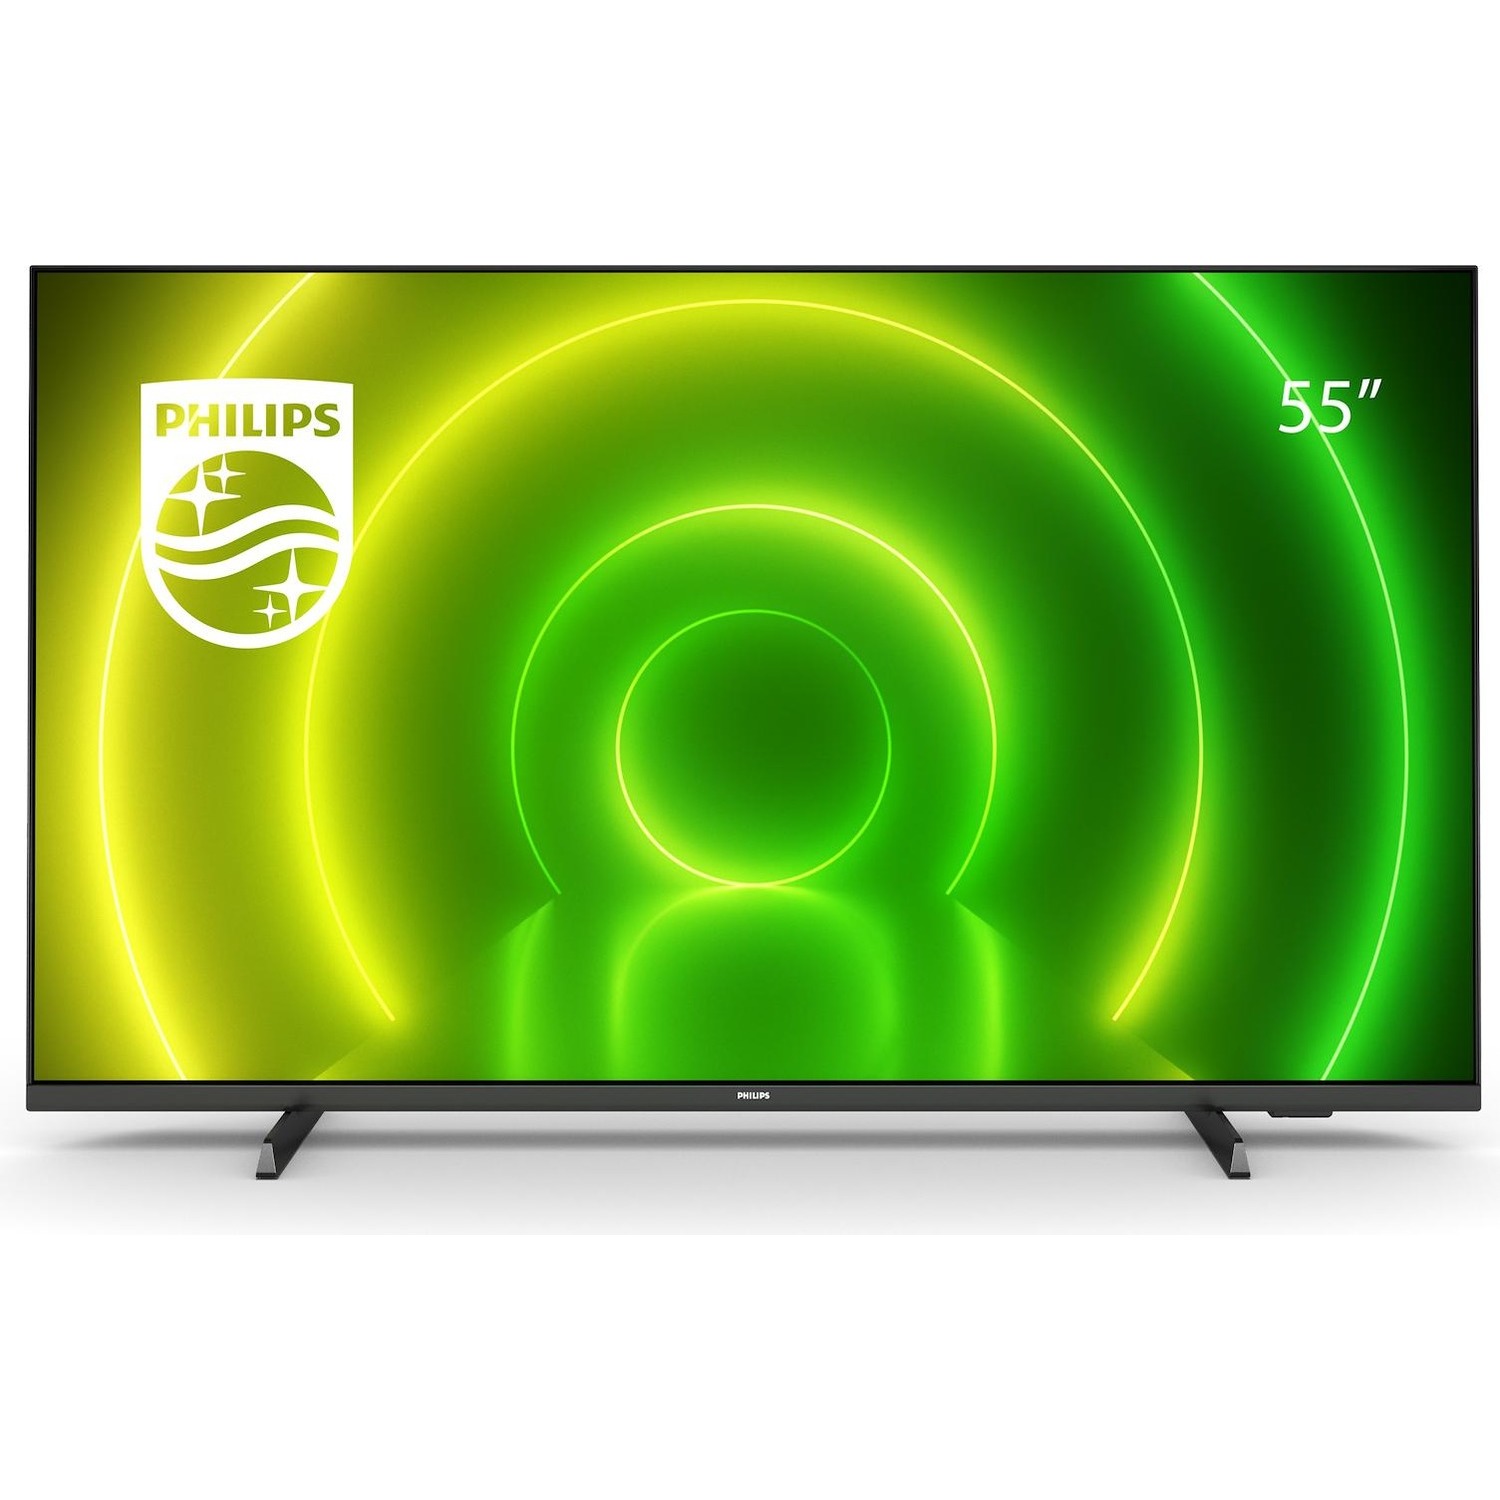 Immagine per TV LED 4K UHD Smart Philips 55PUS7406 da DIMOStore